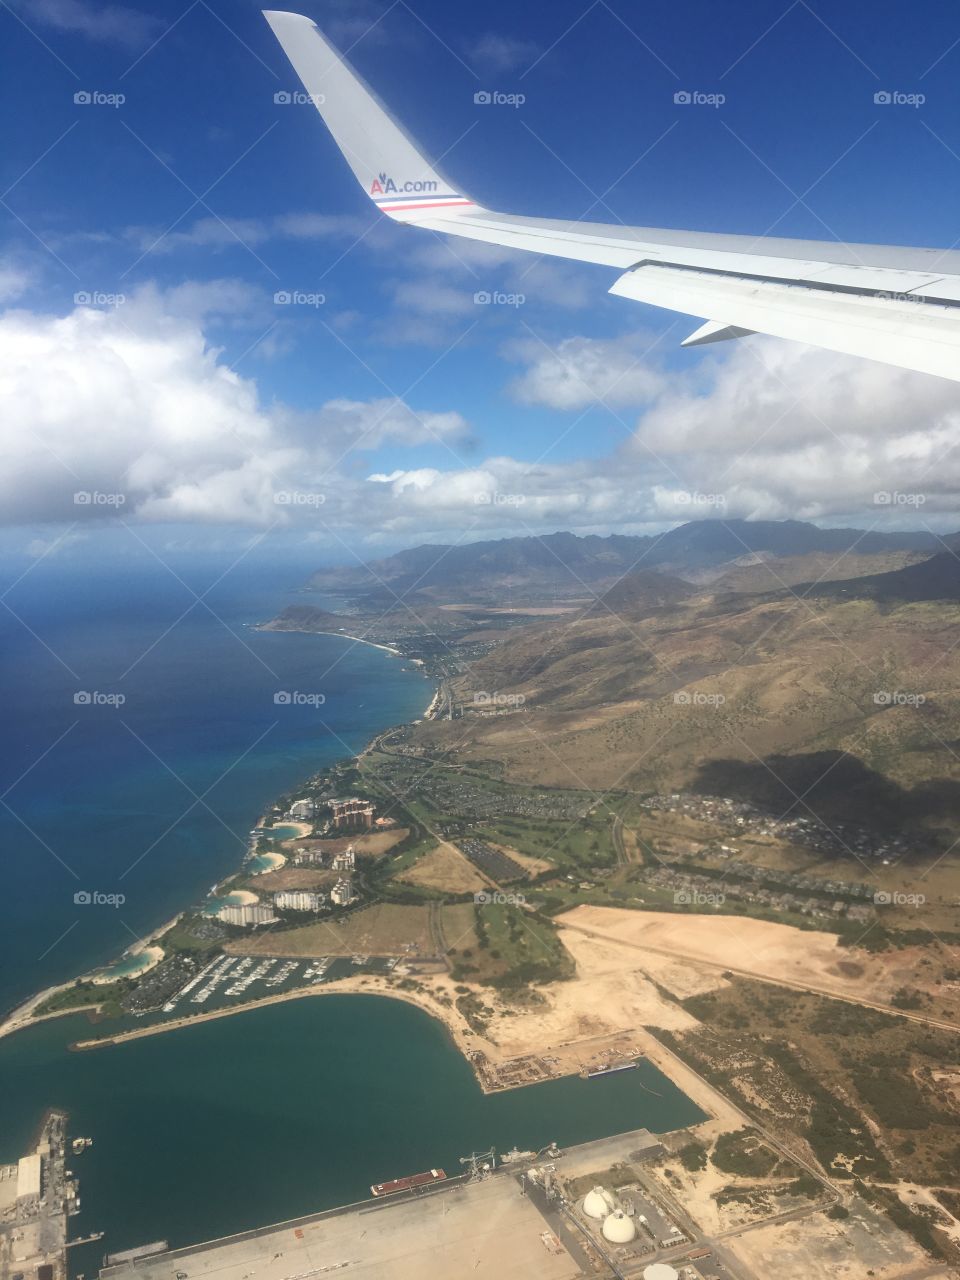 Landing back in Beautiful Hawaii